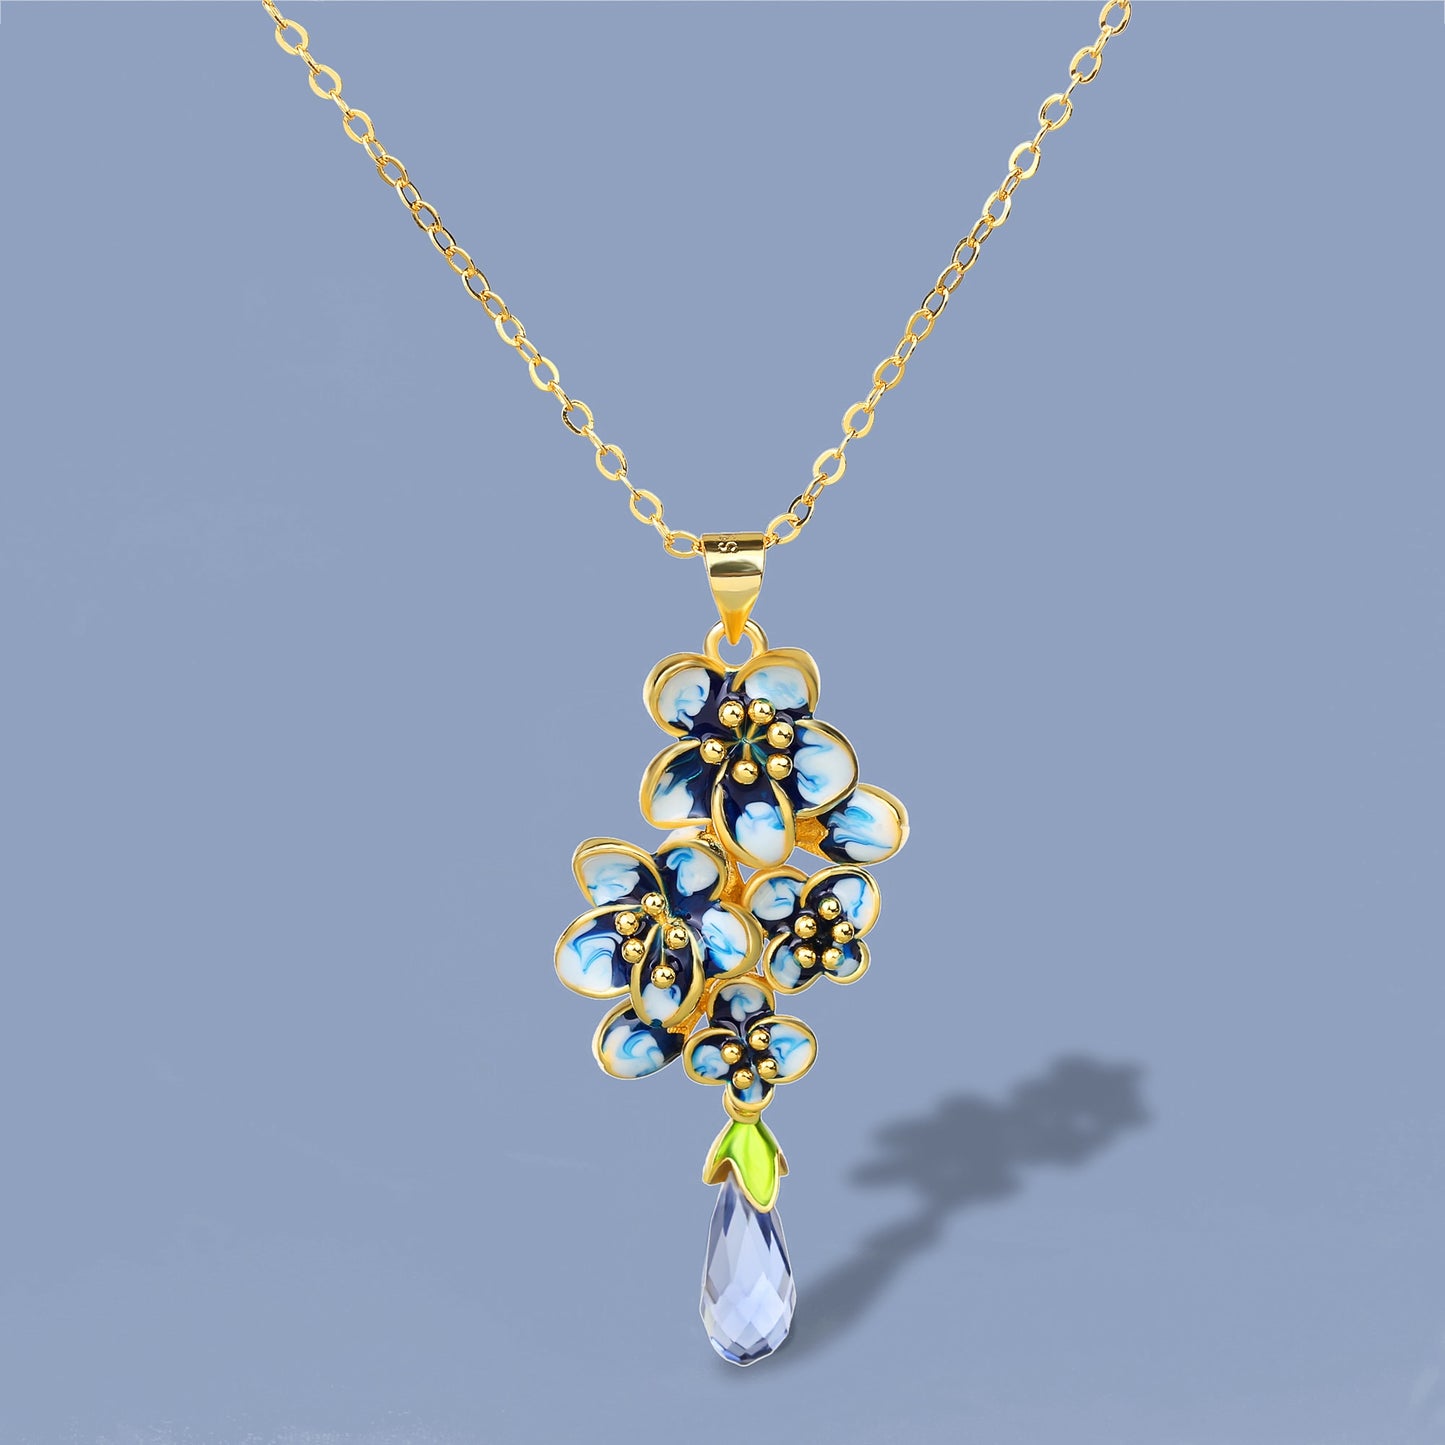 Elegant Blue flower Pendant Necklace for Women with Handmade Enamel in Silver 925